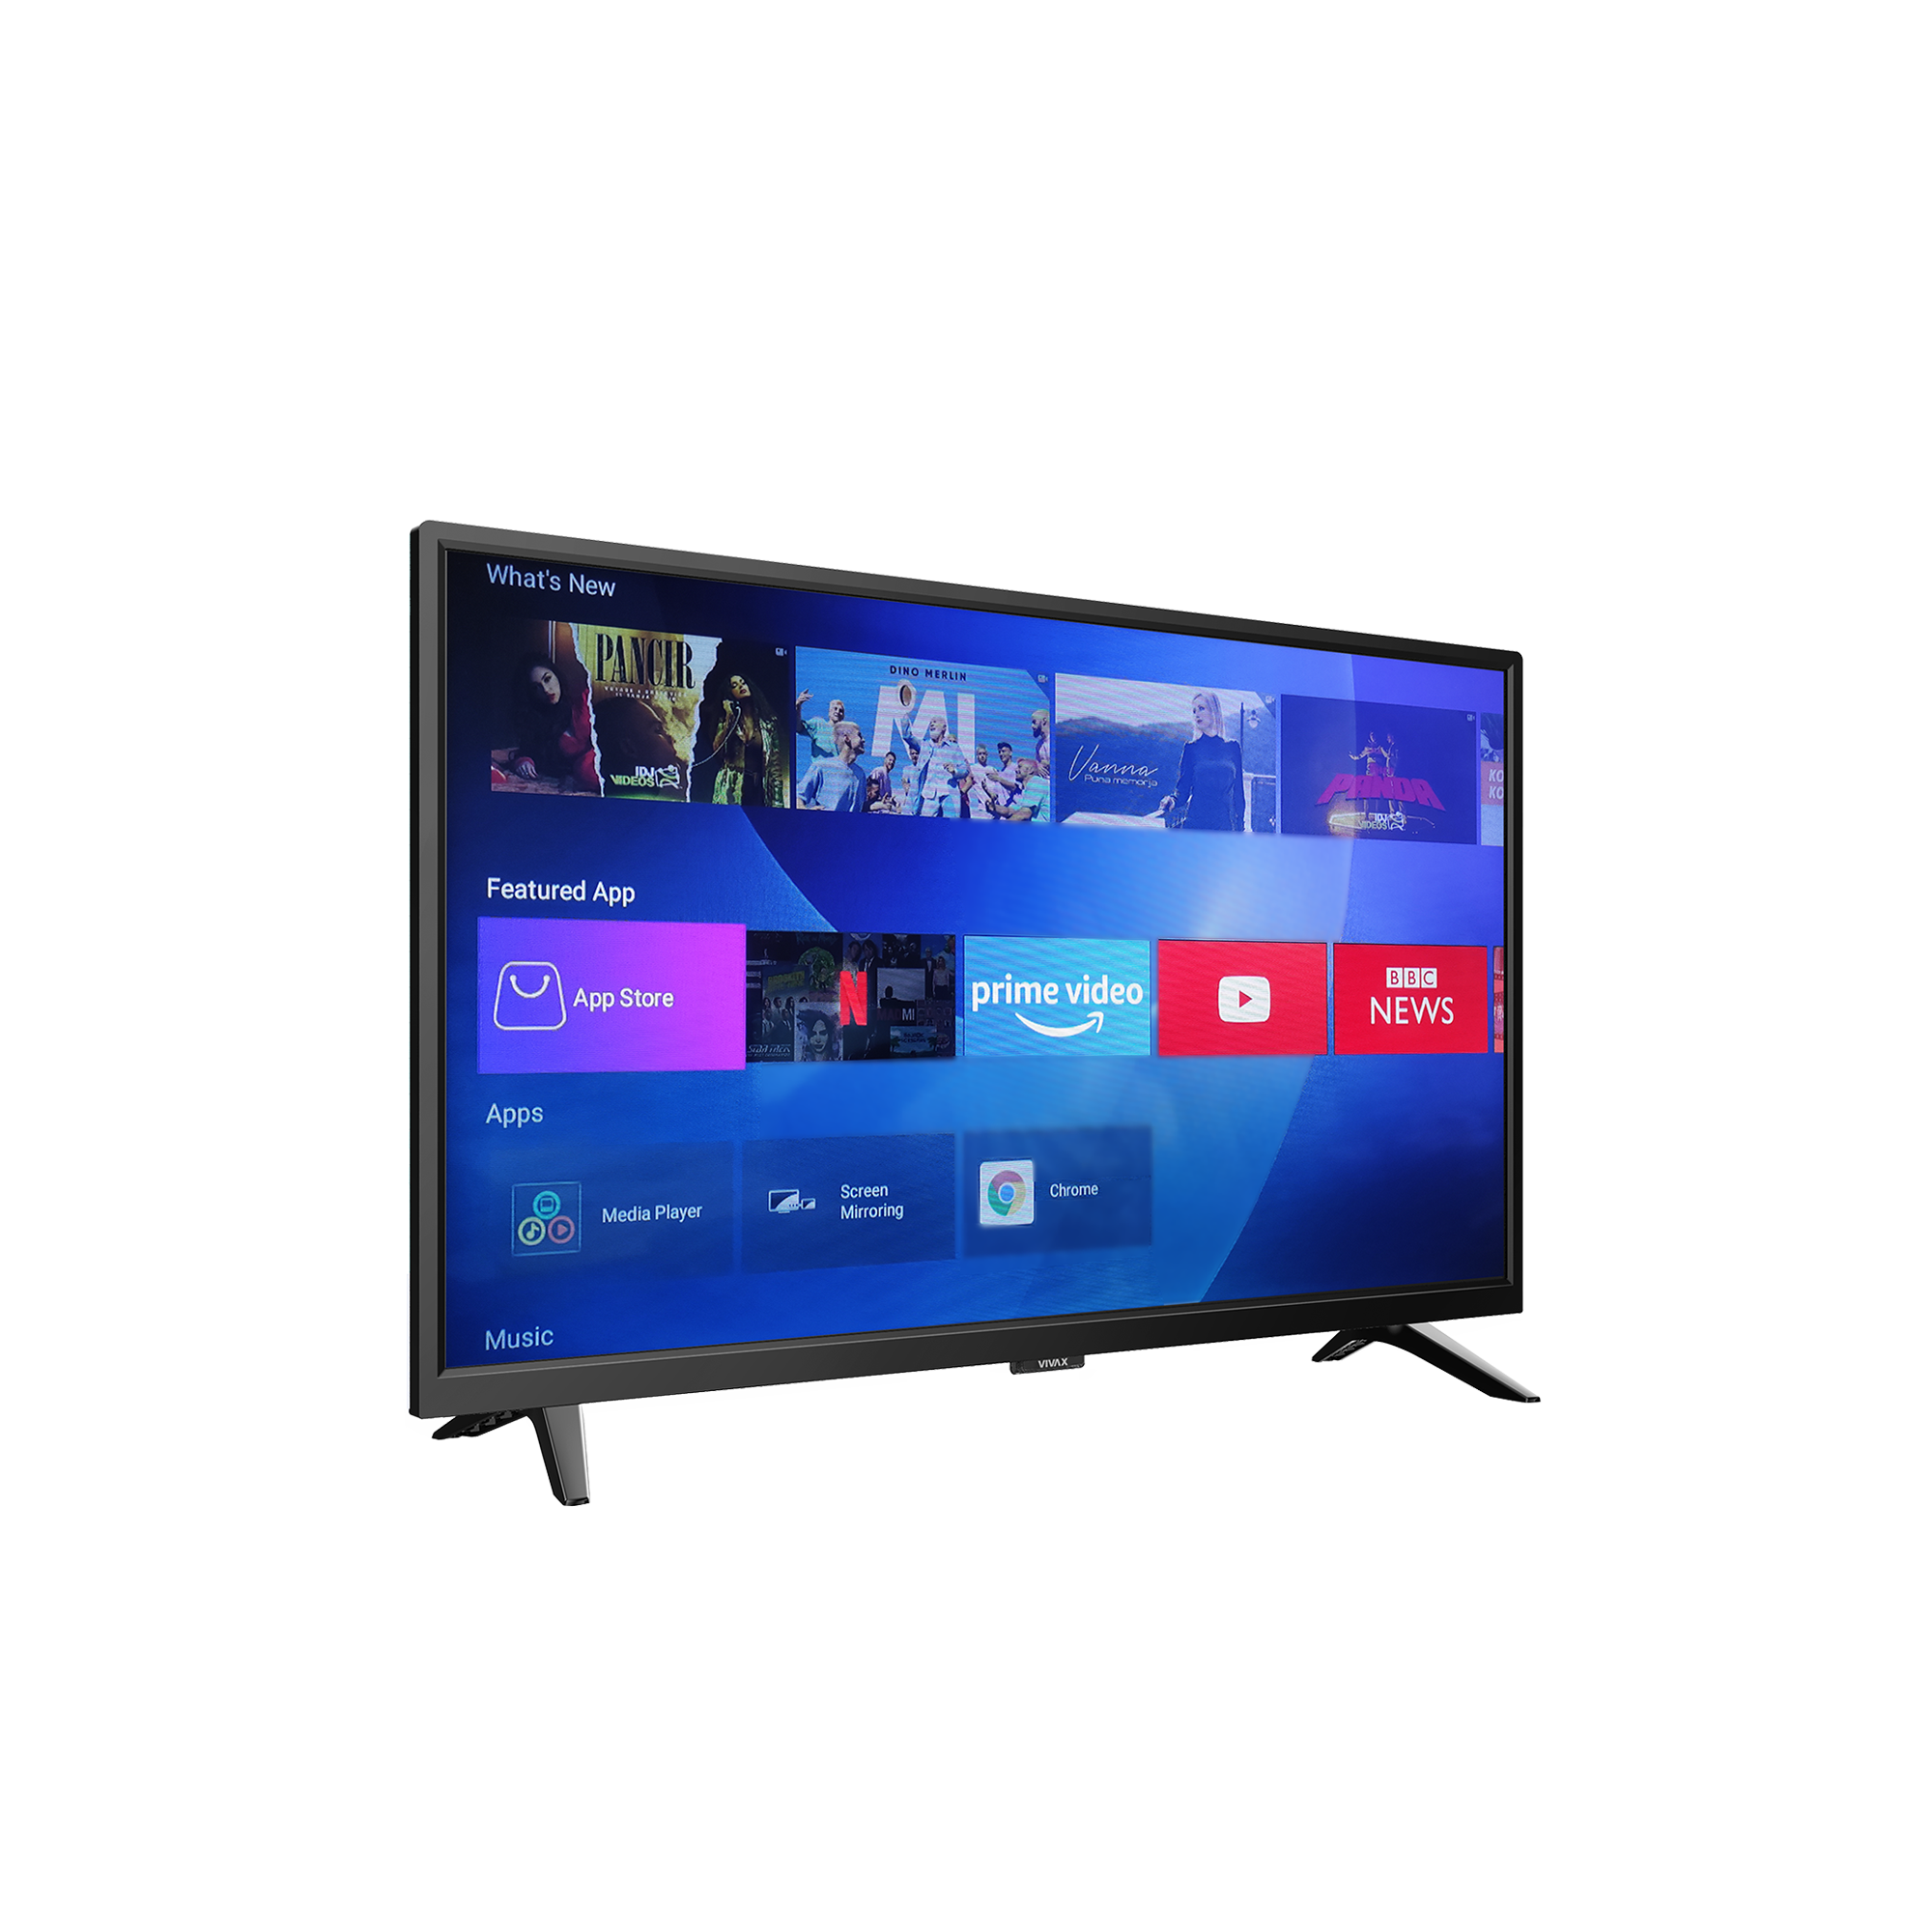 VIVAX smart televizor TV-32S61T2S2SM